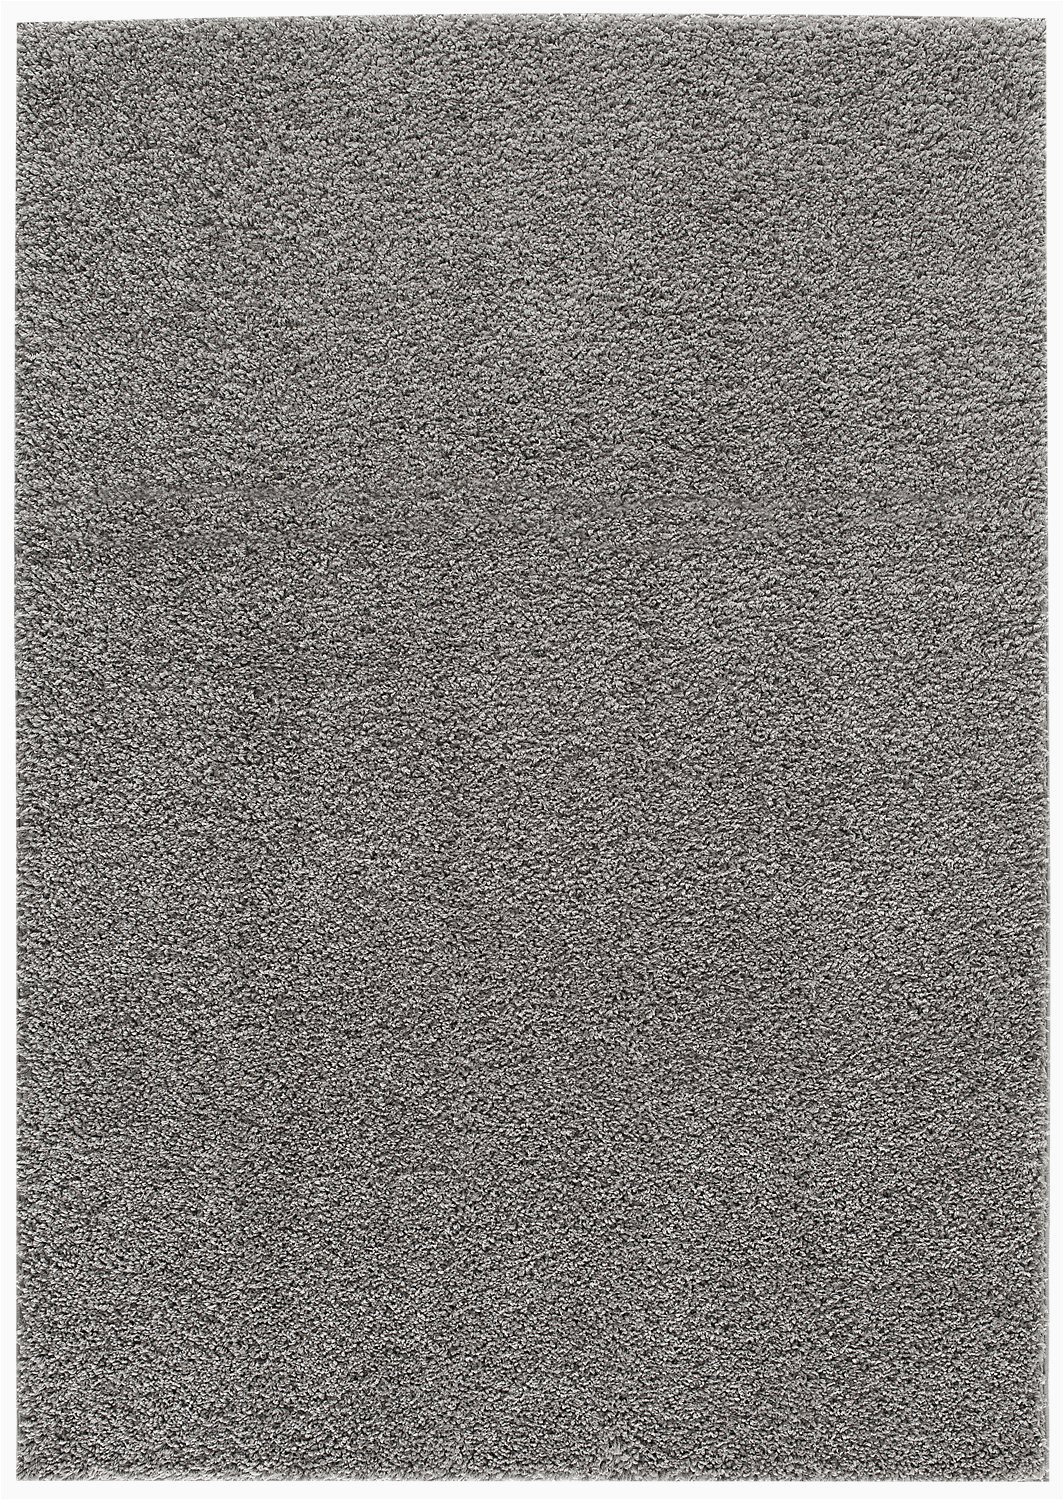 brooklyn grey shag area rug 6 7 x 9 6